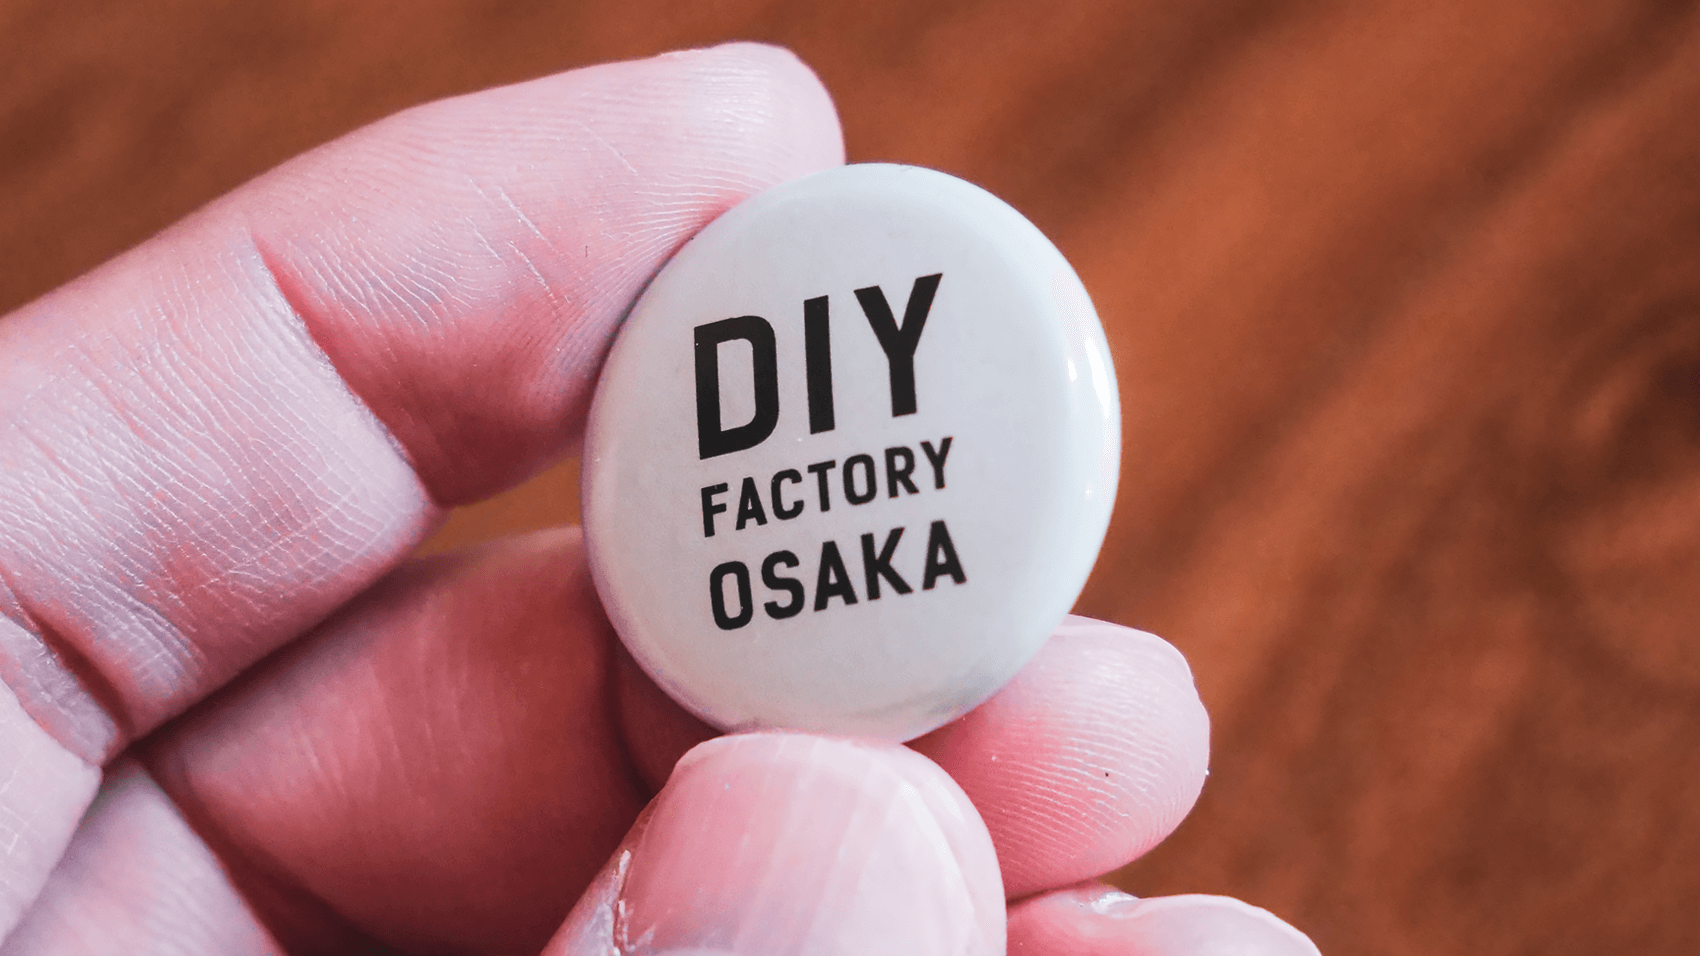 DIY FACTORY OSAKAのロゴ缶バッジデザイン